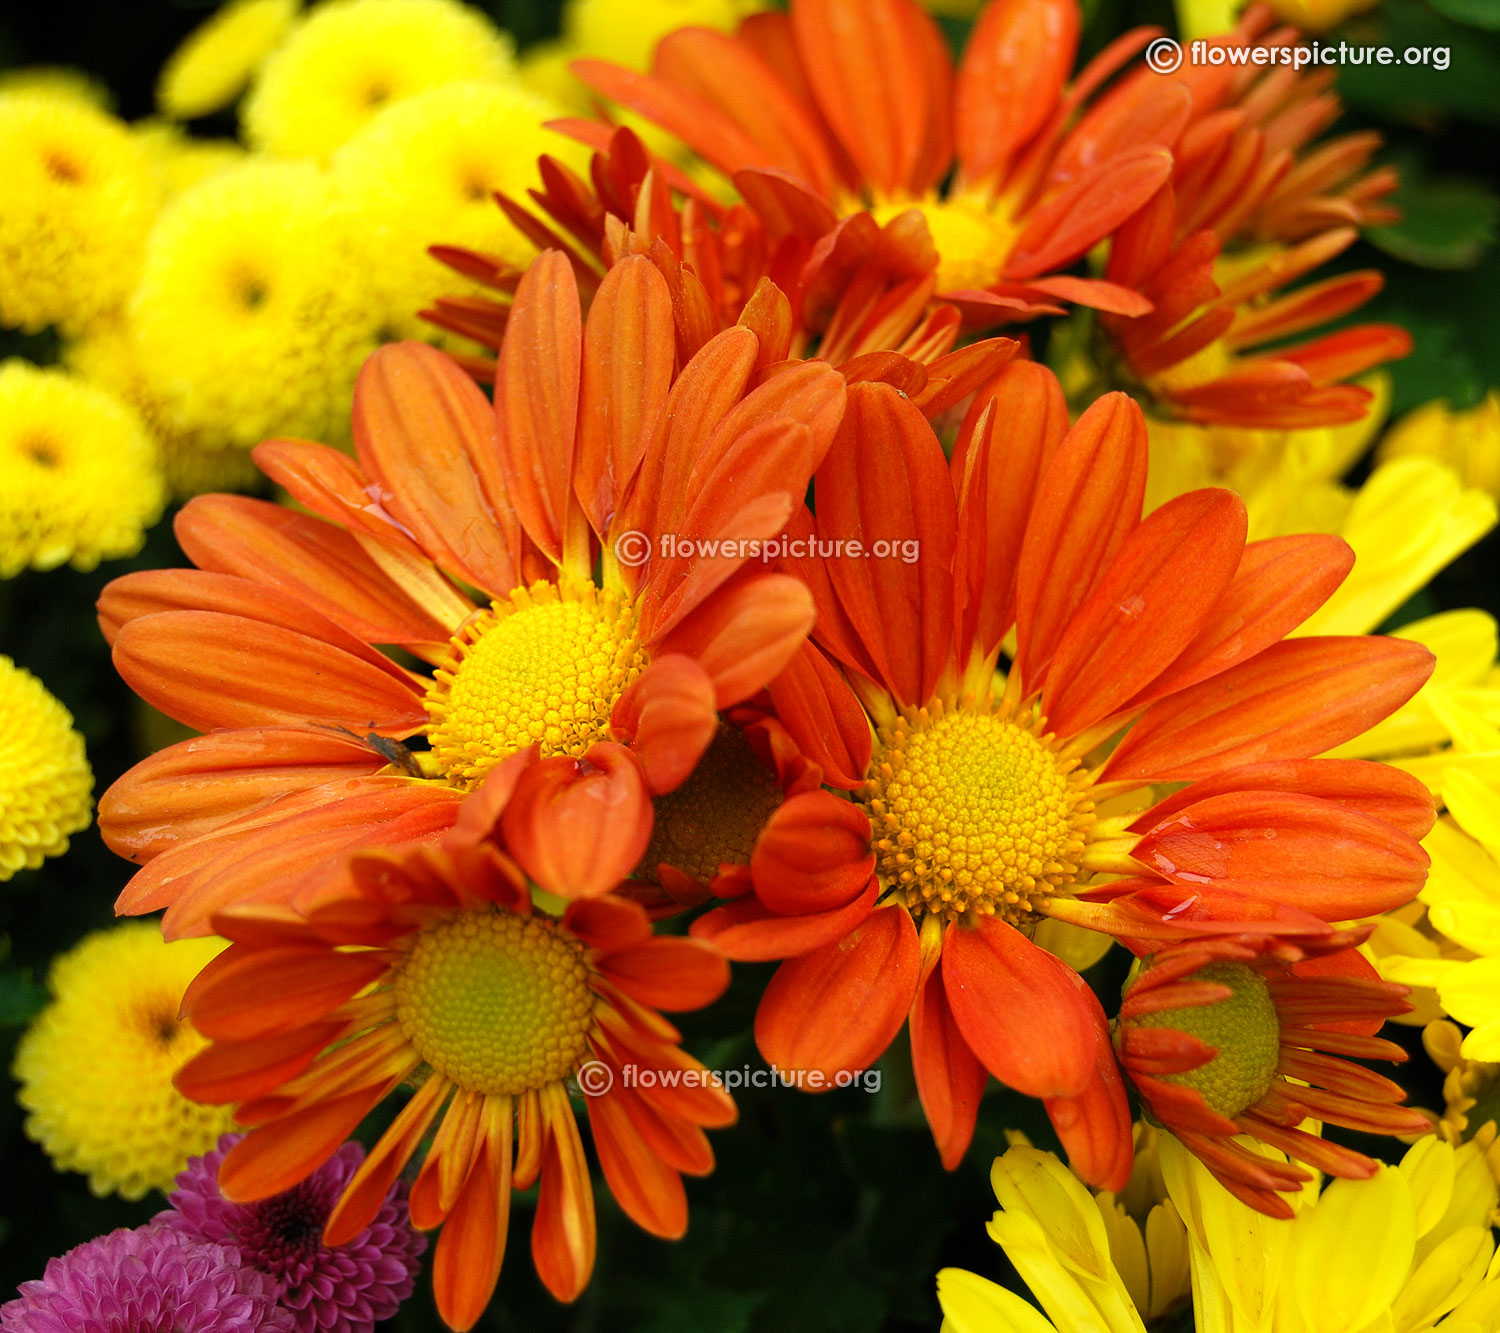 Common Name: Orange chrysanthemum lalbagh flower show 2016 bangalore